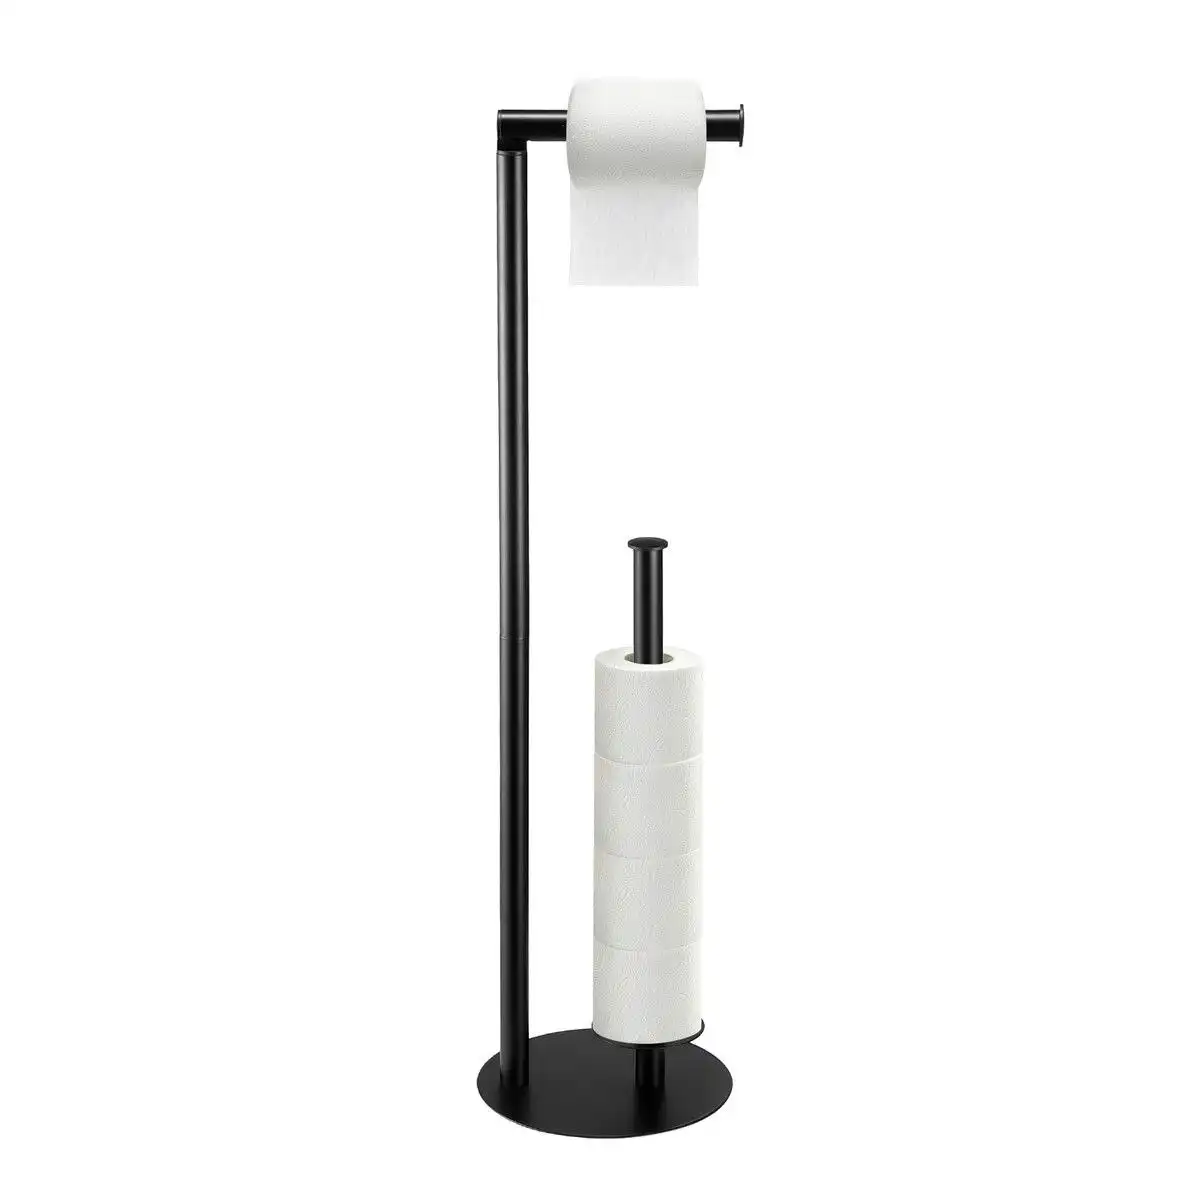 LUXSUITE Free Standing Toilet Paper Holder Bathroom Organiser Spare Tissue Roll Storage Reserve Floor Stand Pole Dispenser RV Home Decor 65.5cm Black